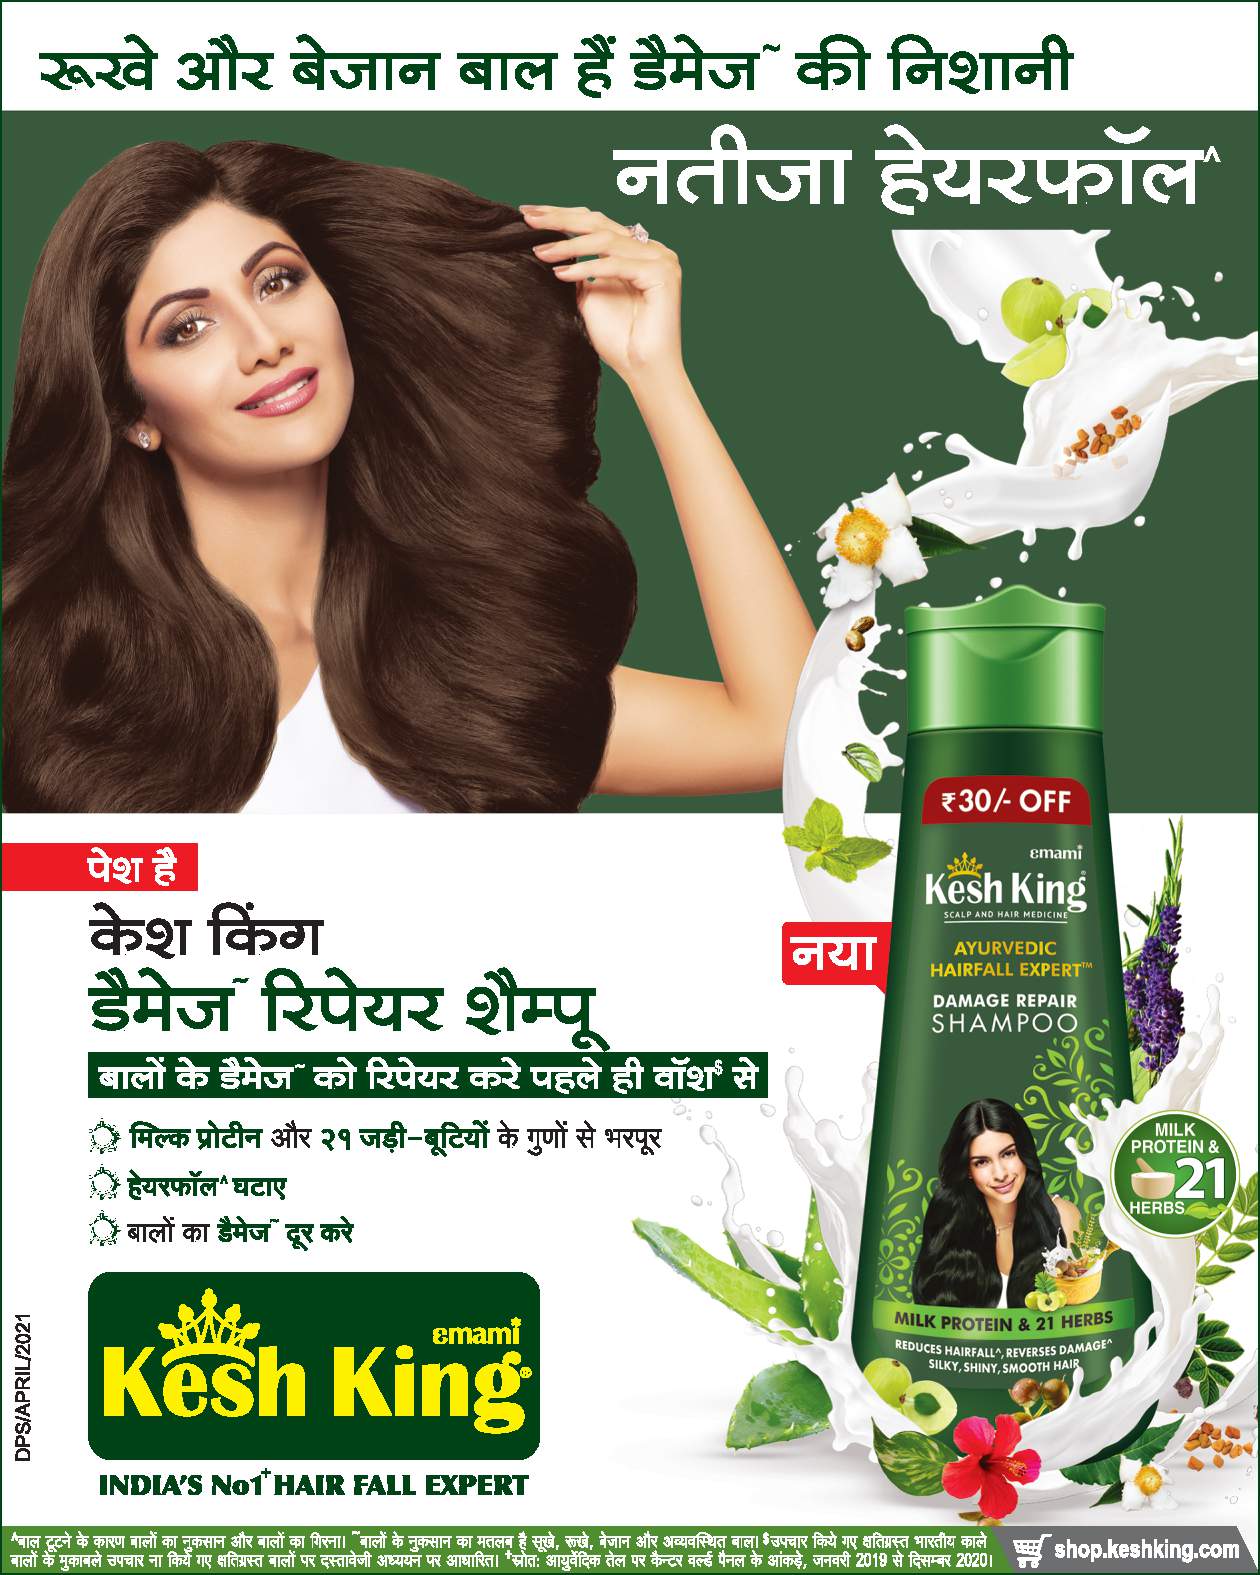 kesh-king-damage-repair-shampoo-rs-30-off-shilpa-shetty-ad-dainik-jagran-lucknow-3-7-2021